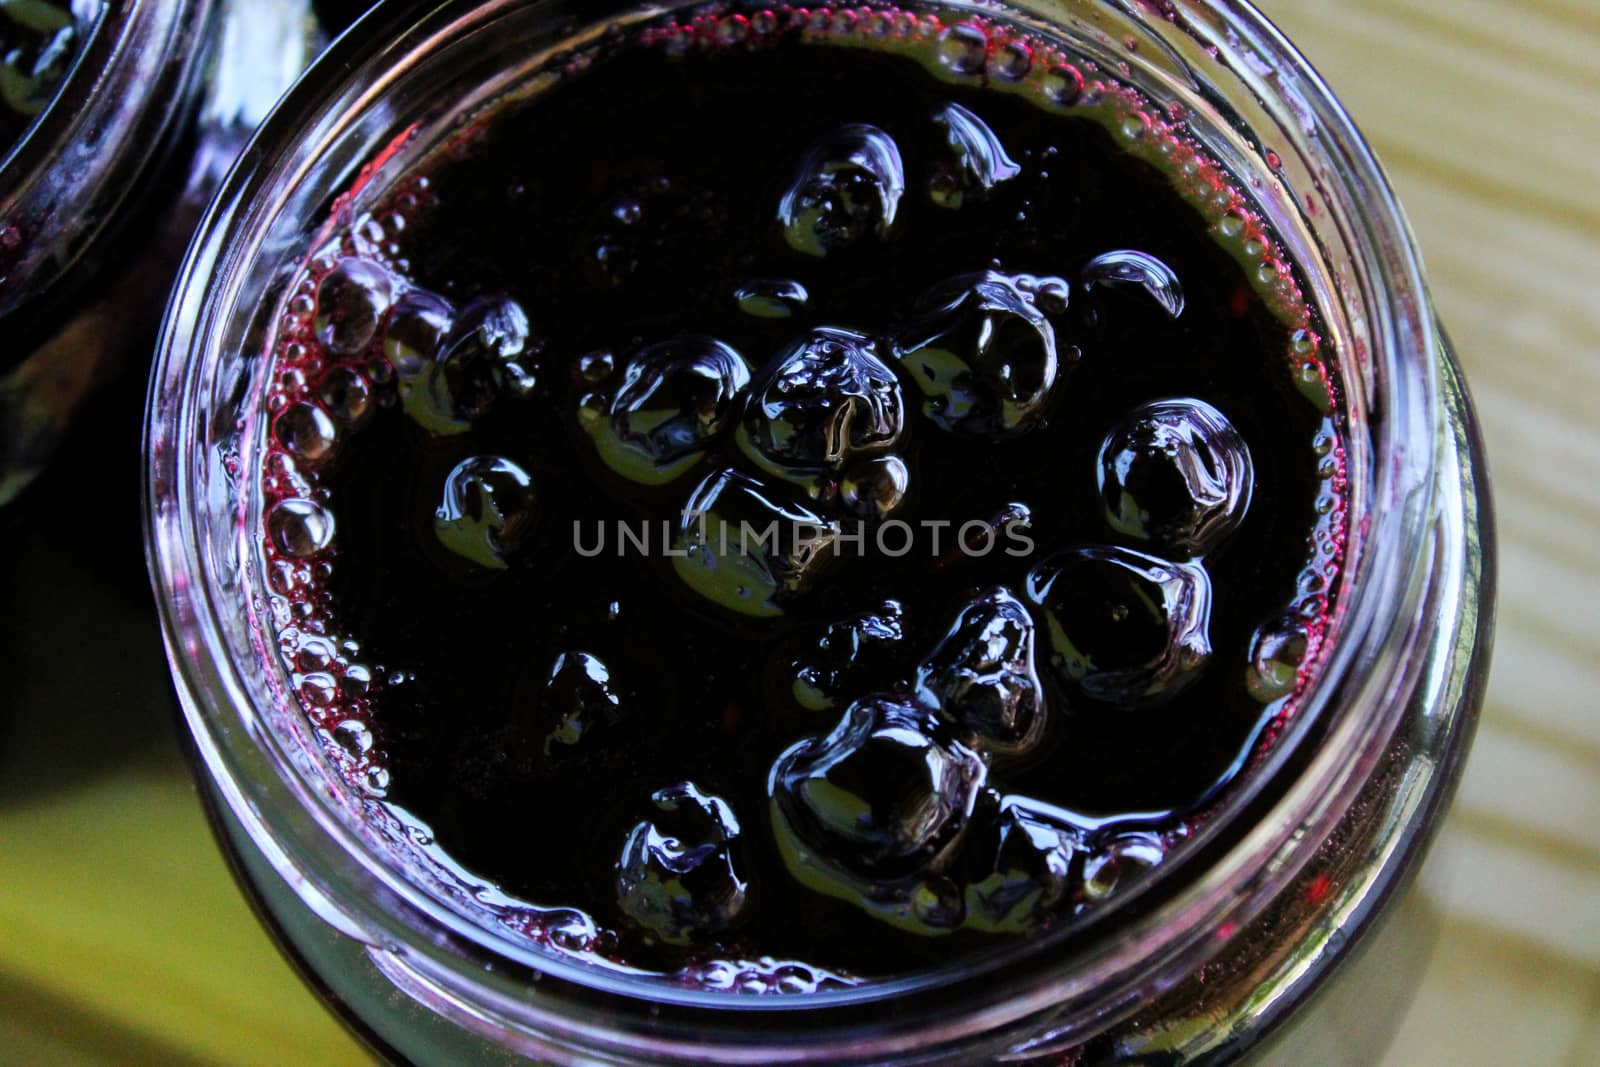 Homemade chokeberry jam. The process of filling jars in a homely way. Zavidovici, Bosnia and Herzegovina.